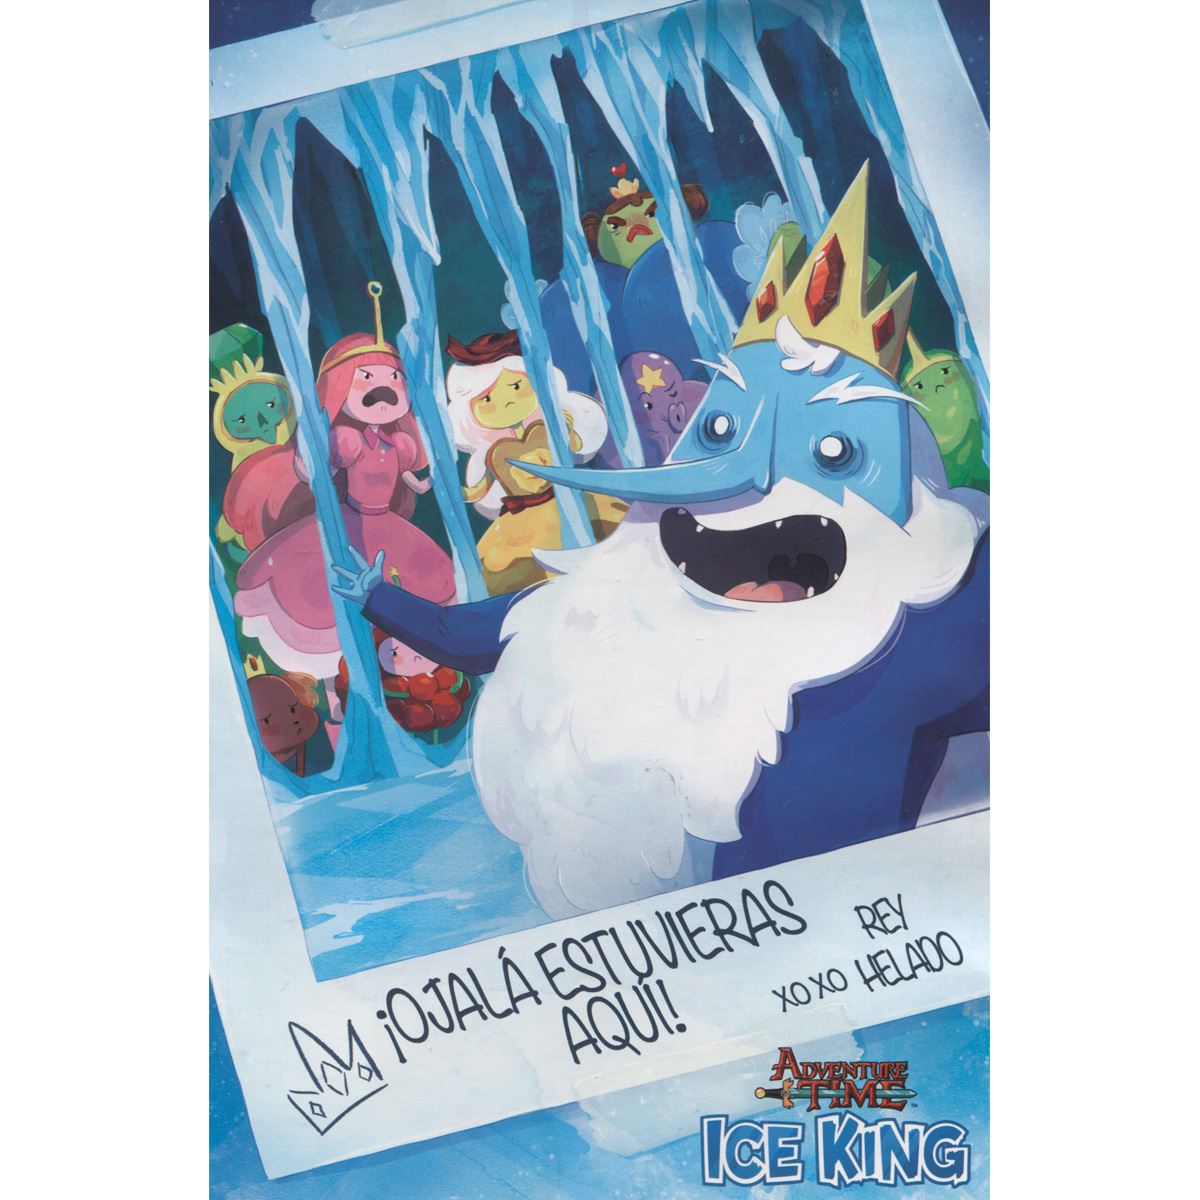 Comic adventure time ice king 2C